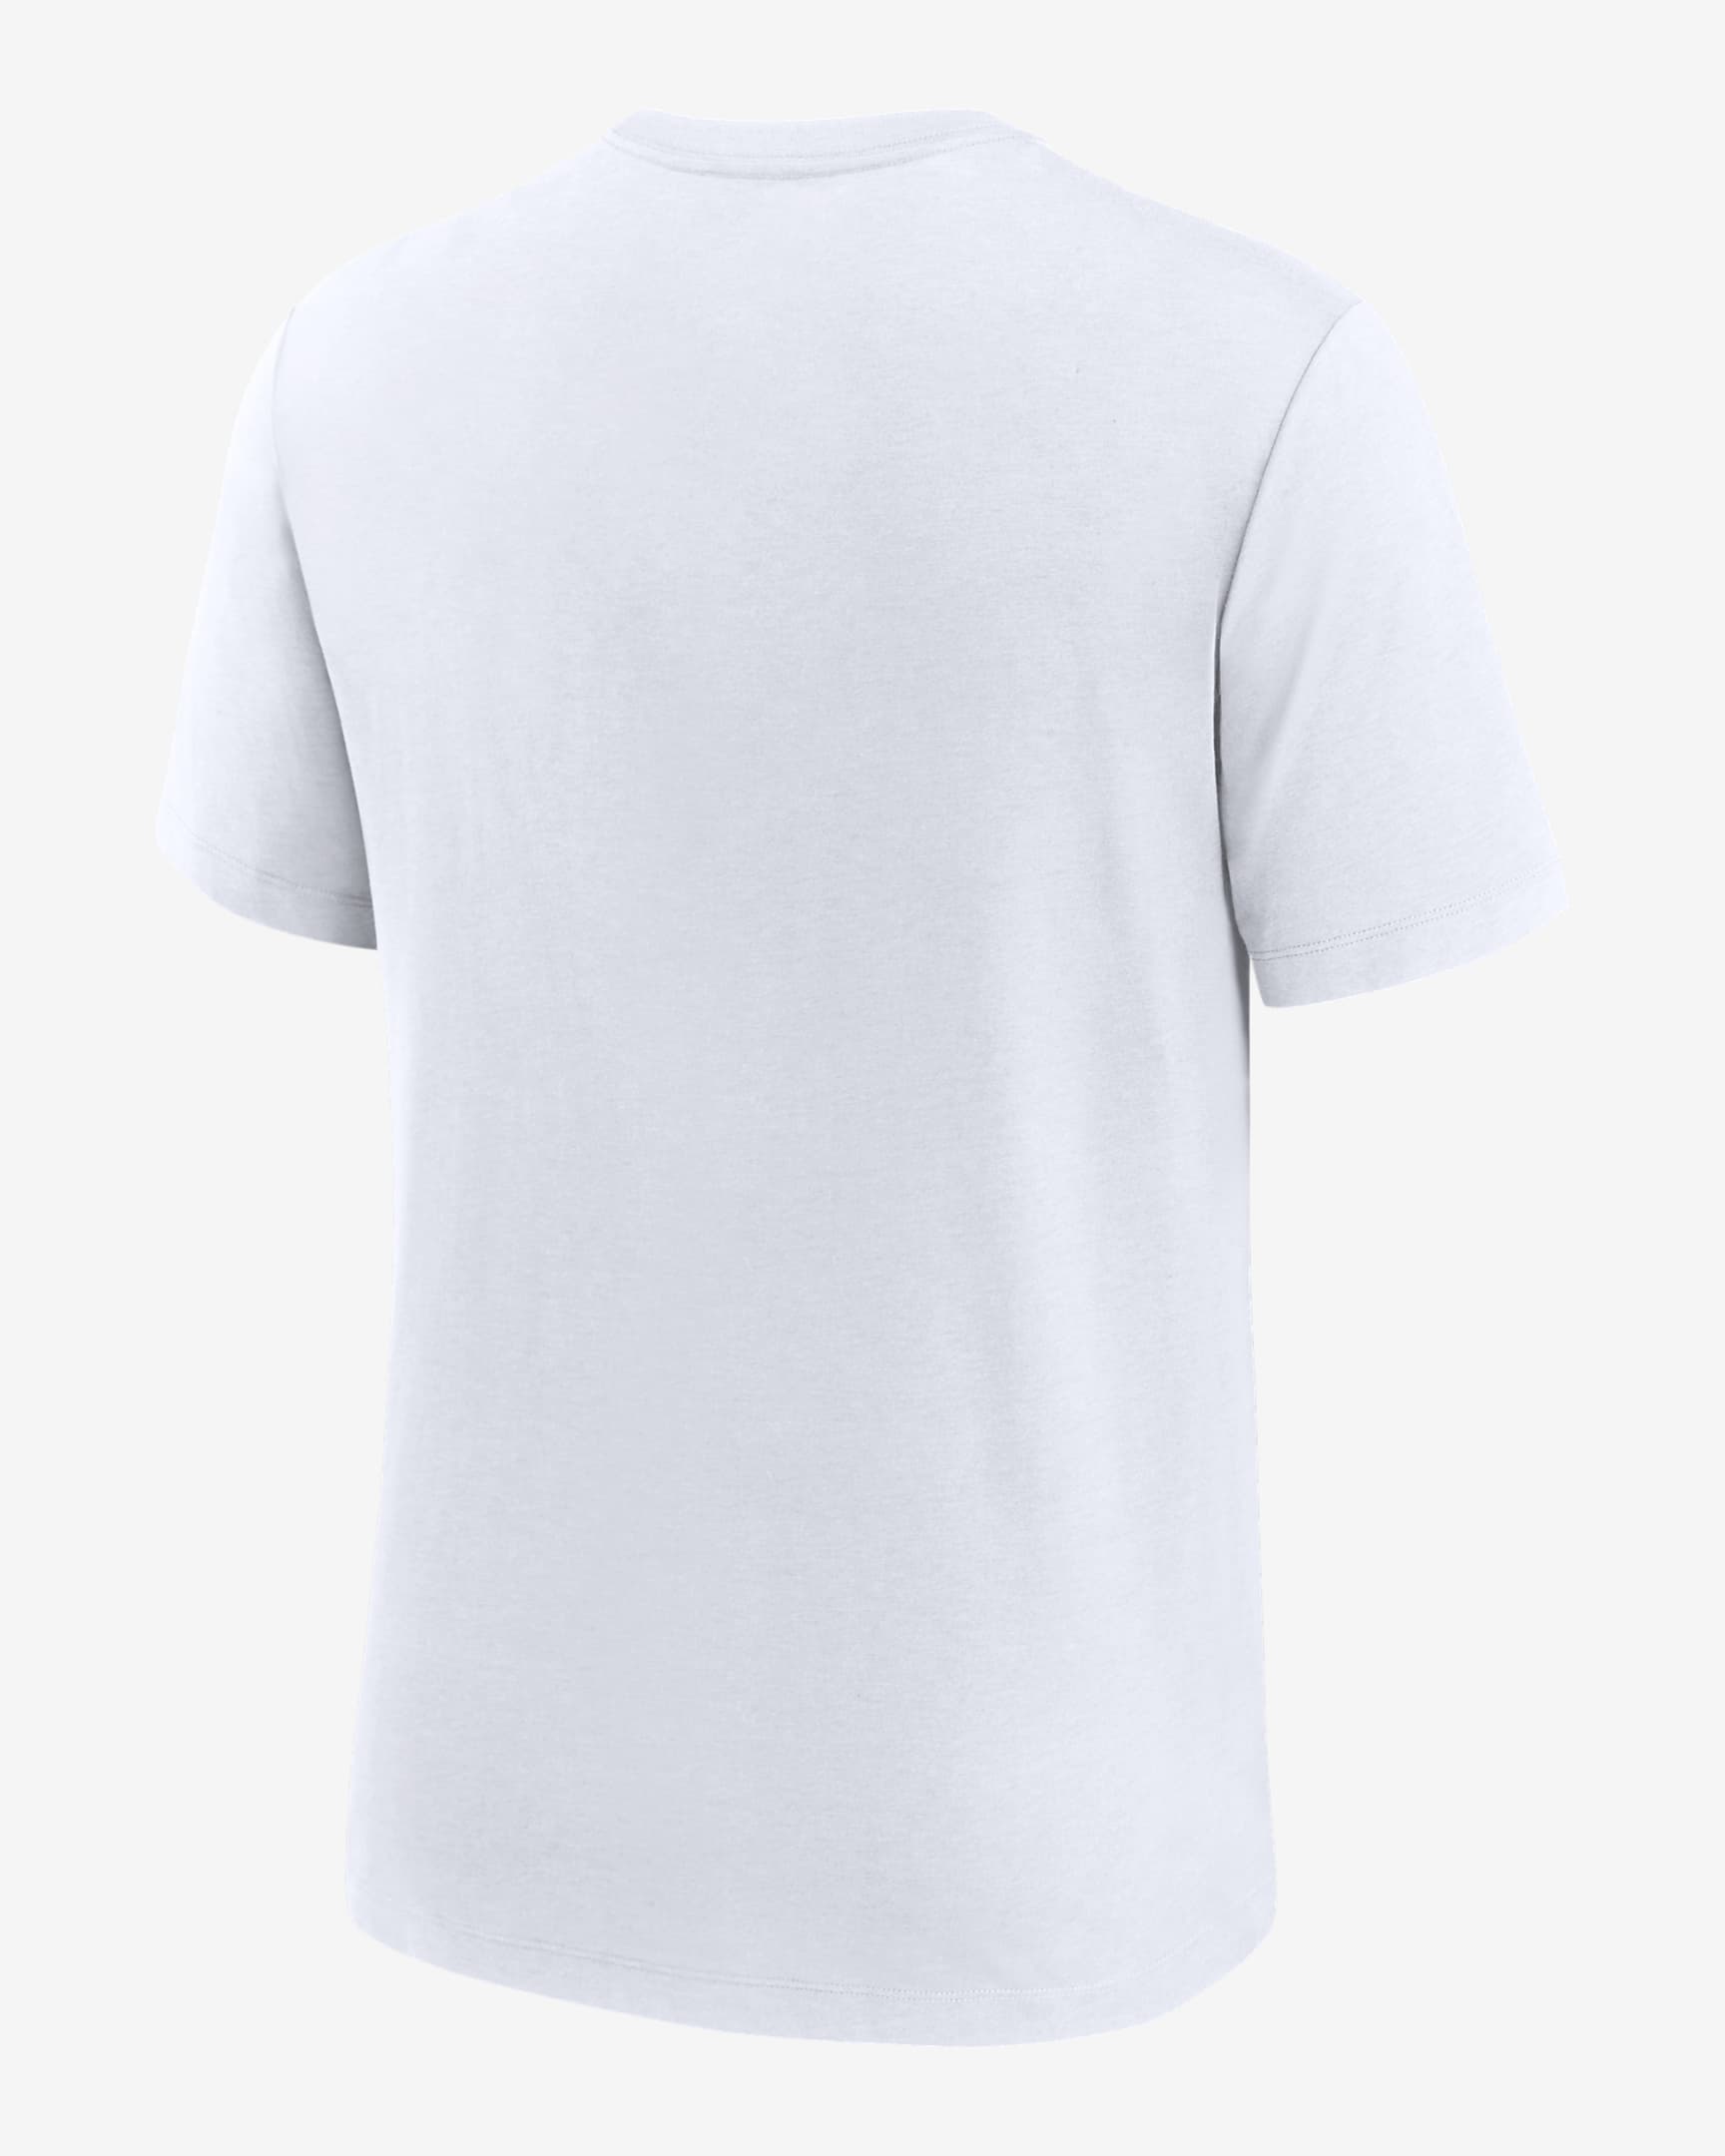 Nike City Connect (MLB San Diego Padres) Men's T-Shirt. Nike.com